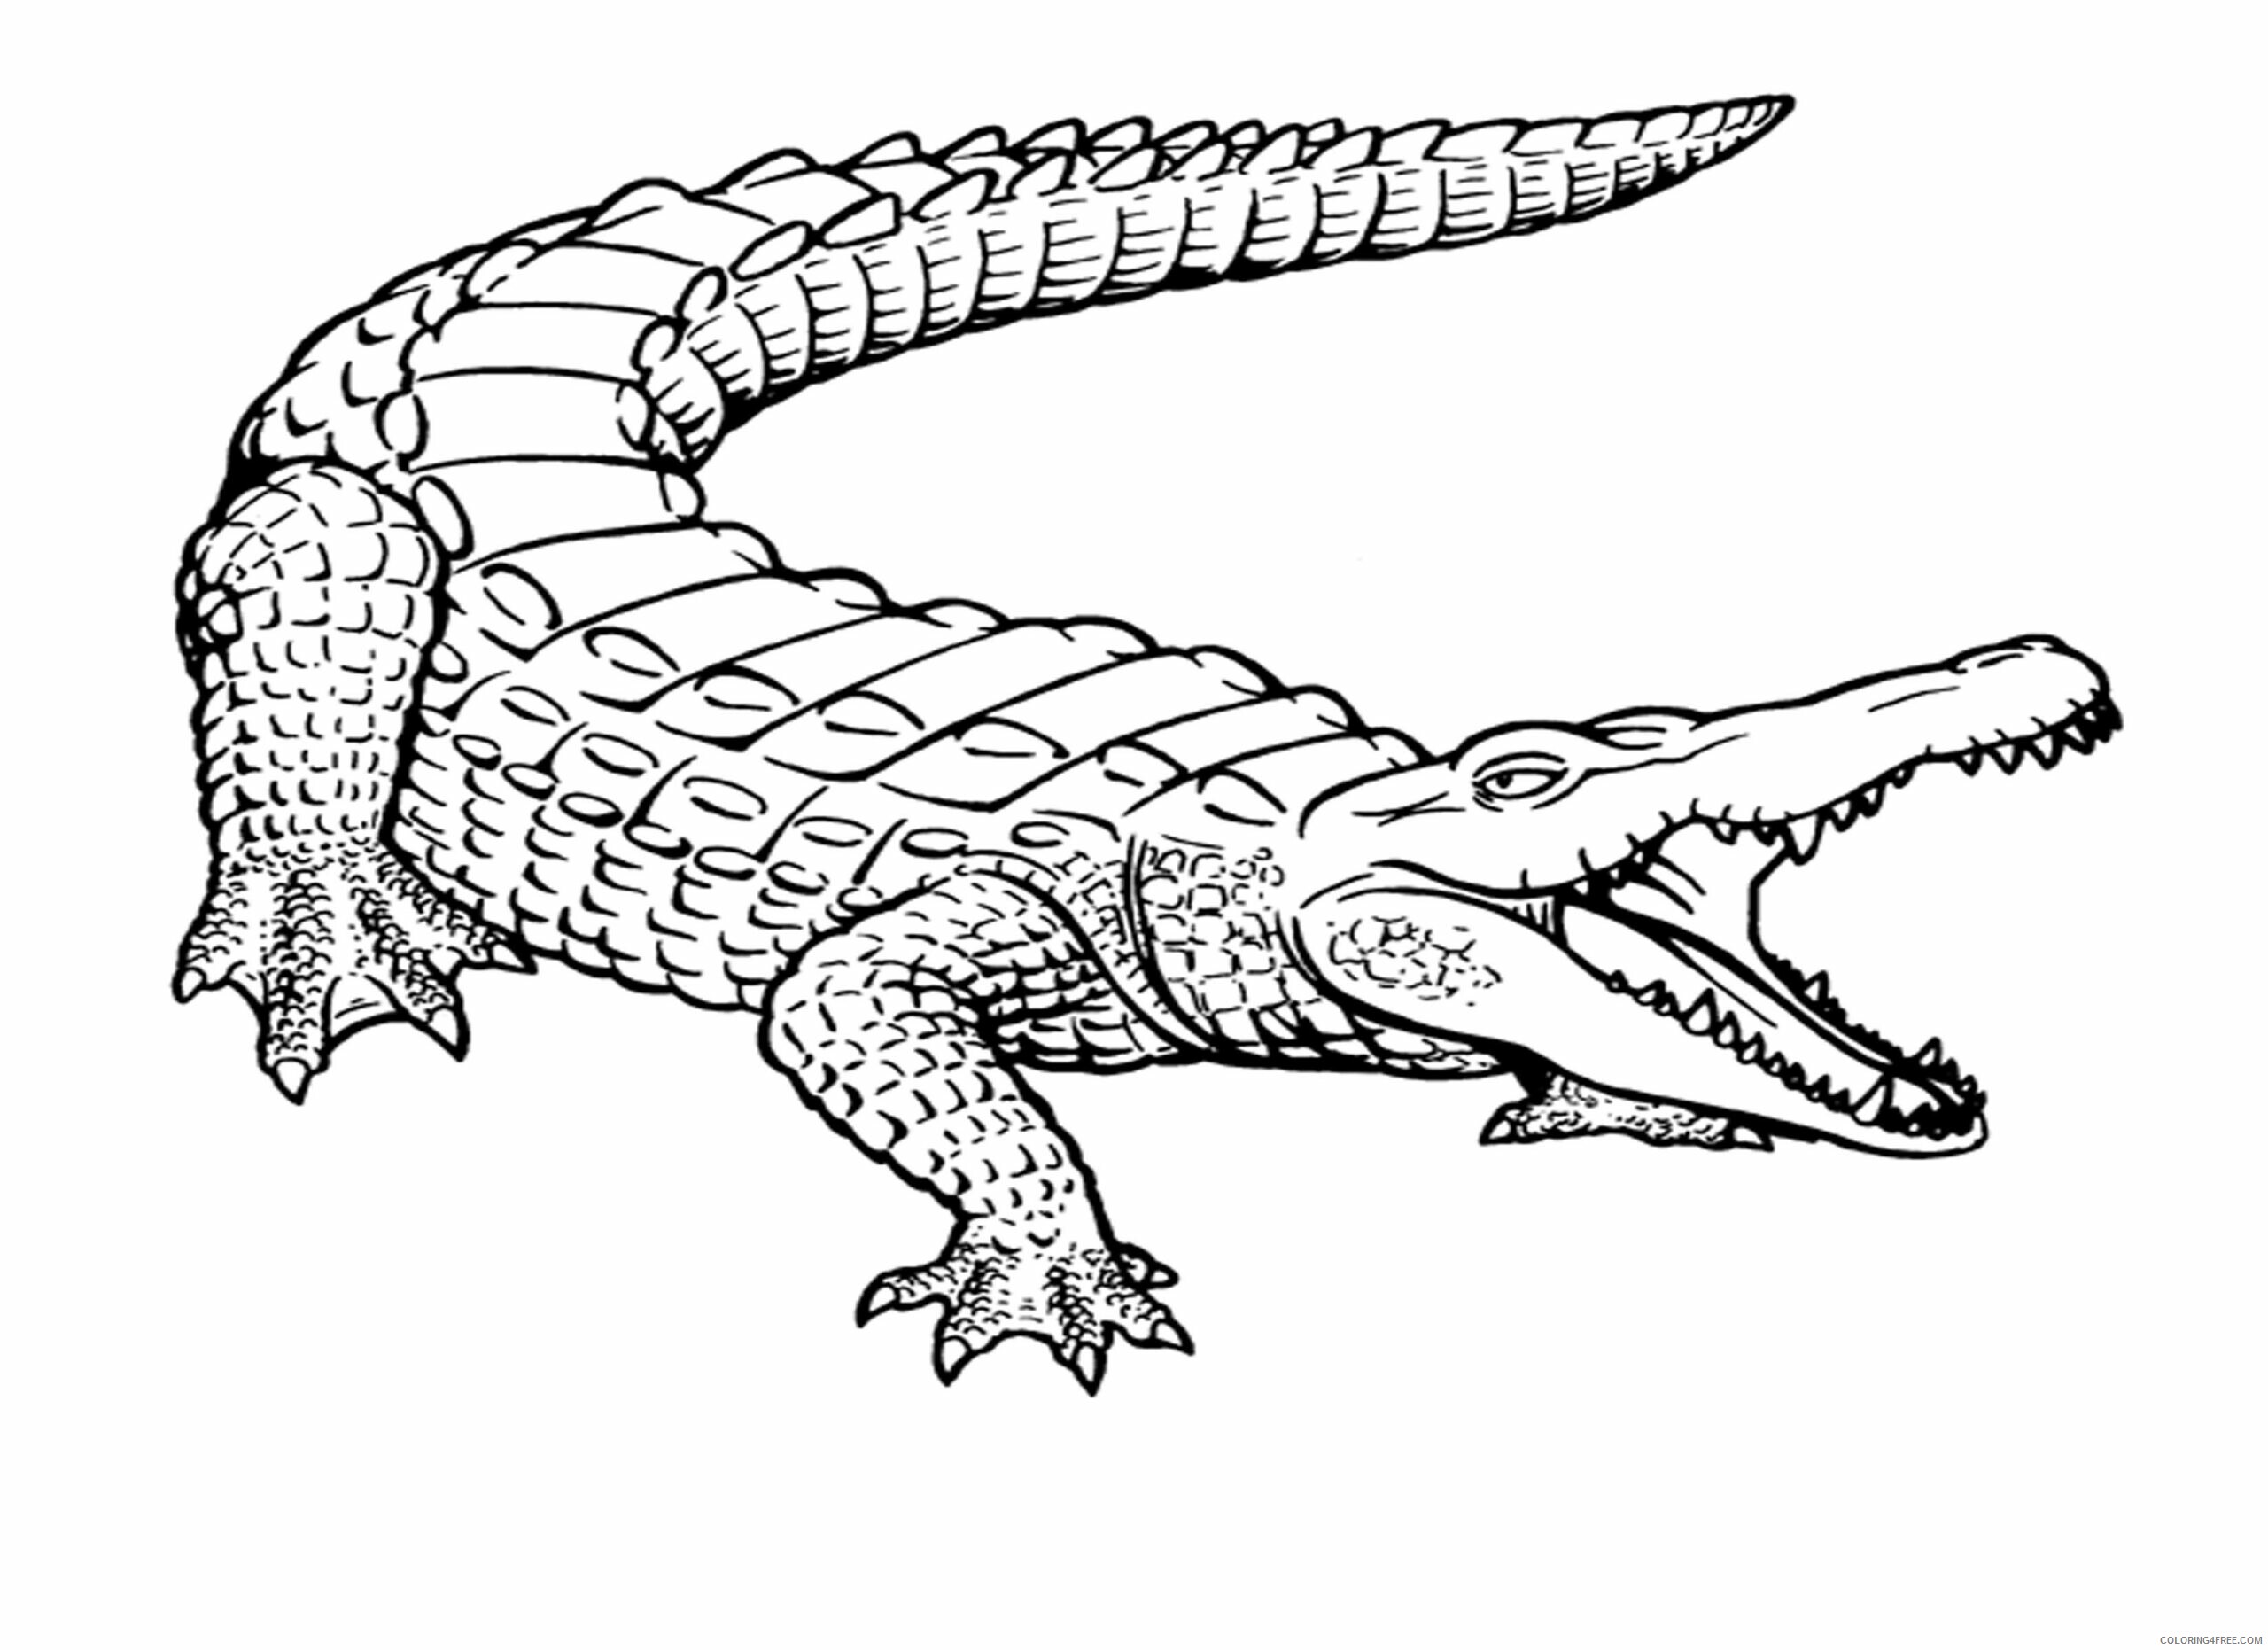 Crocodile Coloring Pages Animal Printable Sheets Crocodile Kids 2021 1310 Coloring4free